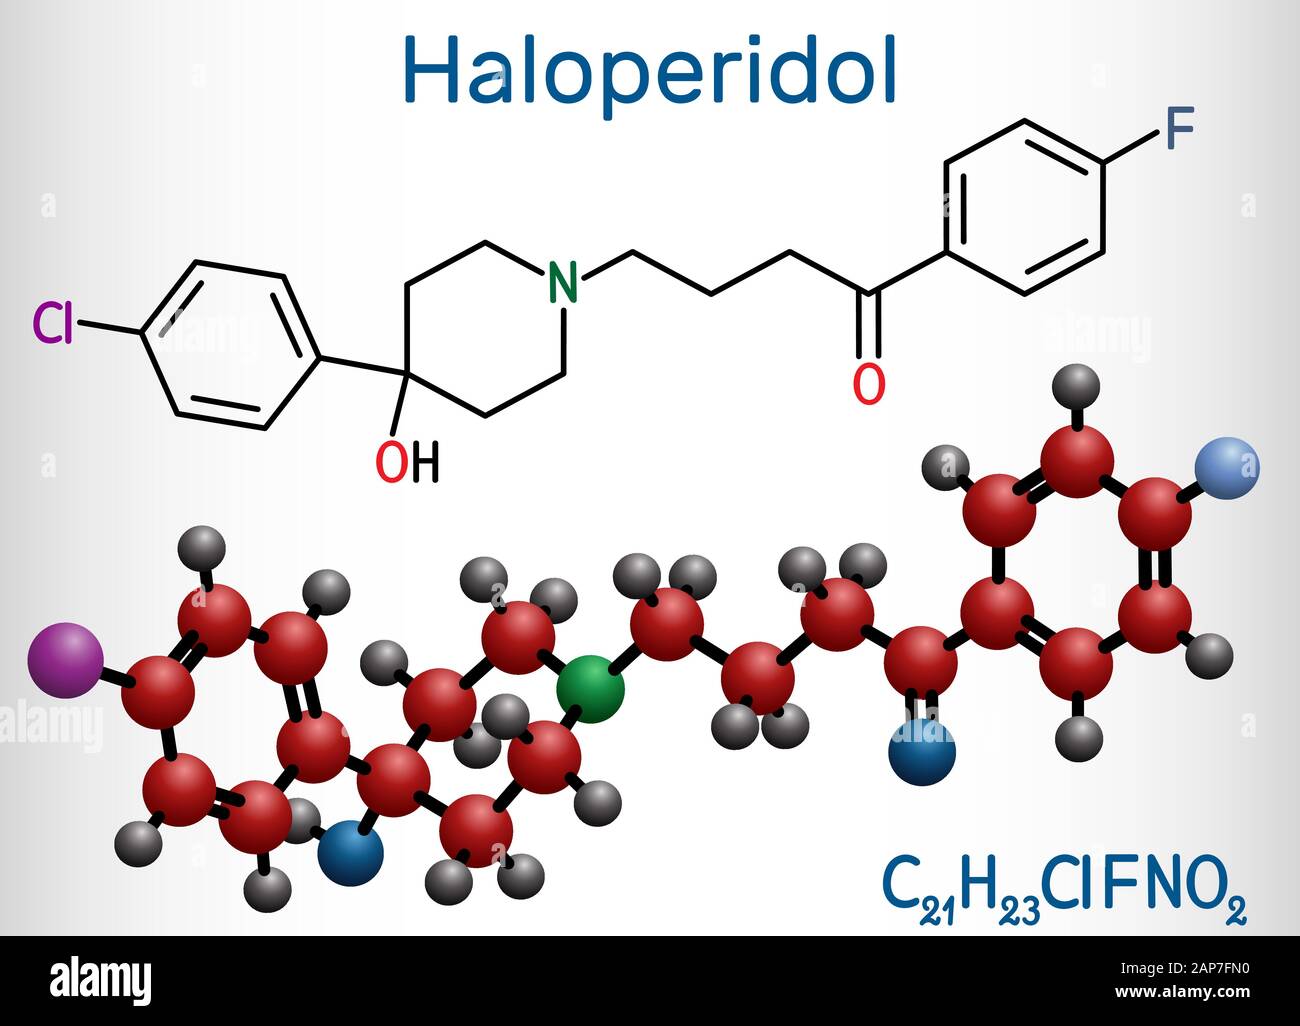 Haloperidol Molekül, ist antipsychotische Medikation. Strukturelle chemische Formel und Molekül-Modell. Vector Illustration Stock Vektor